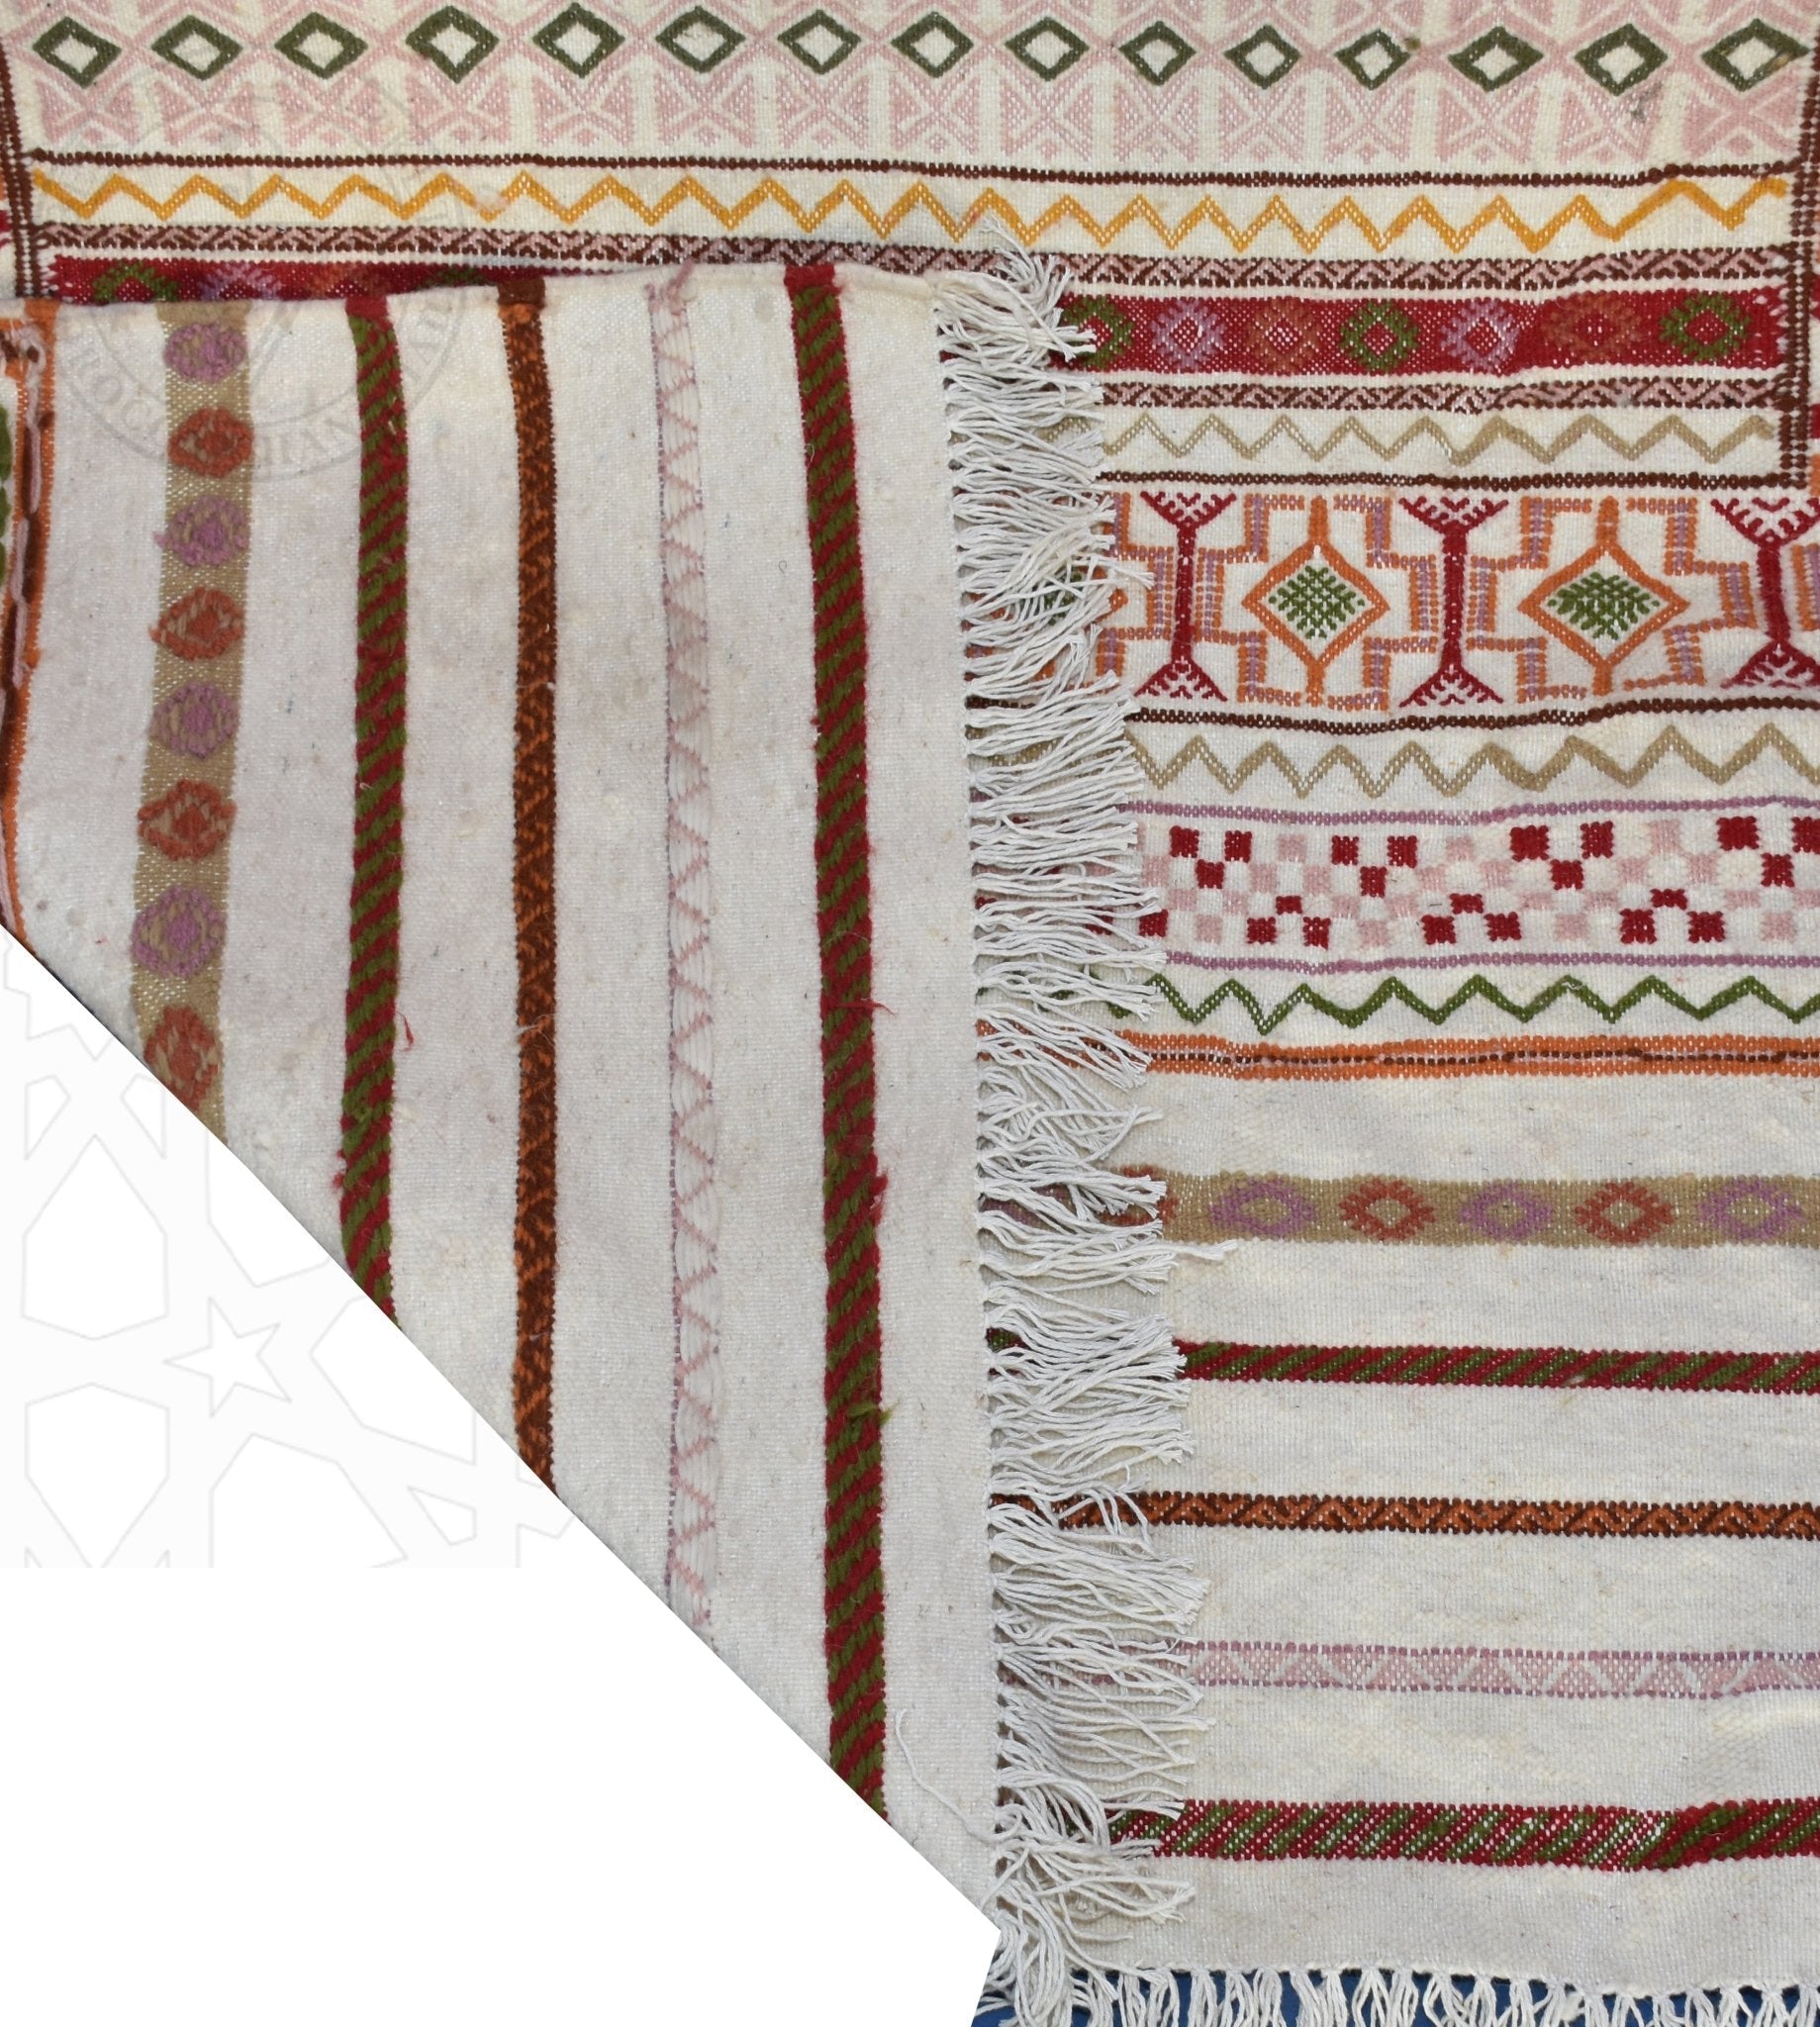 Flatweave kilim hanbal Moroccan rug - 4.11 x 6.24 ft / 125 x 190 cm - Berbers Market